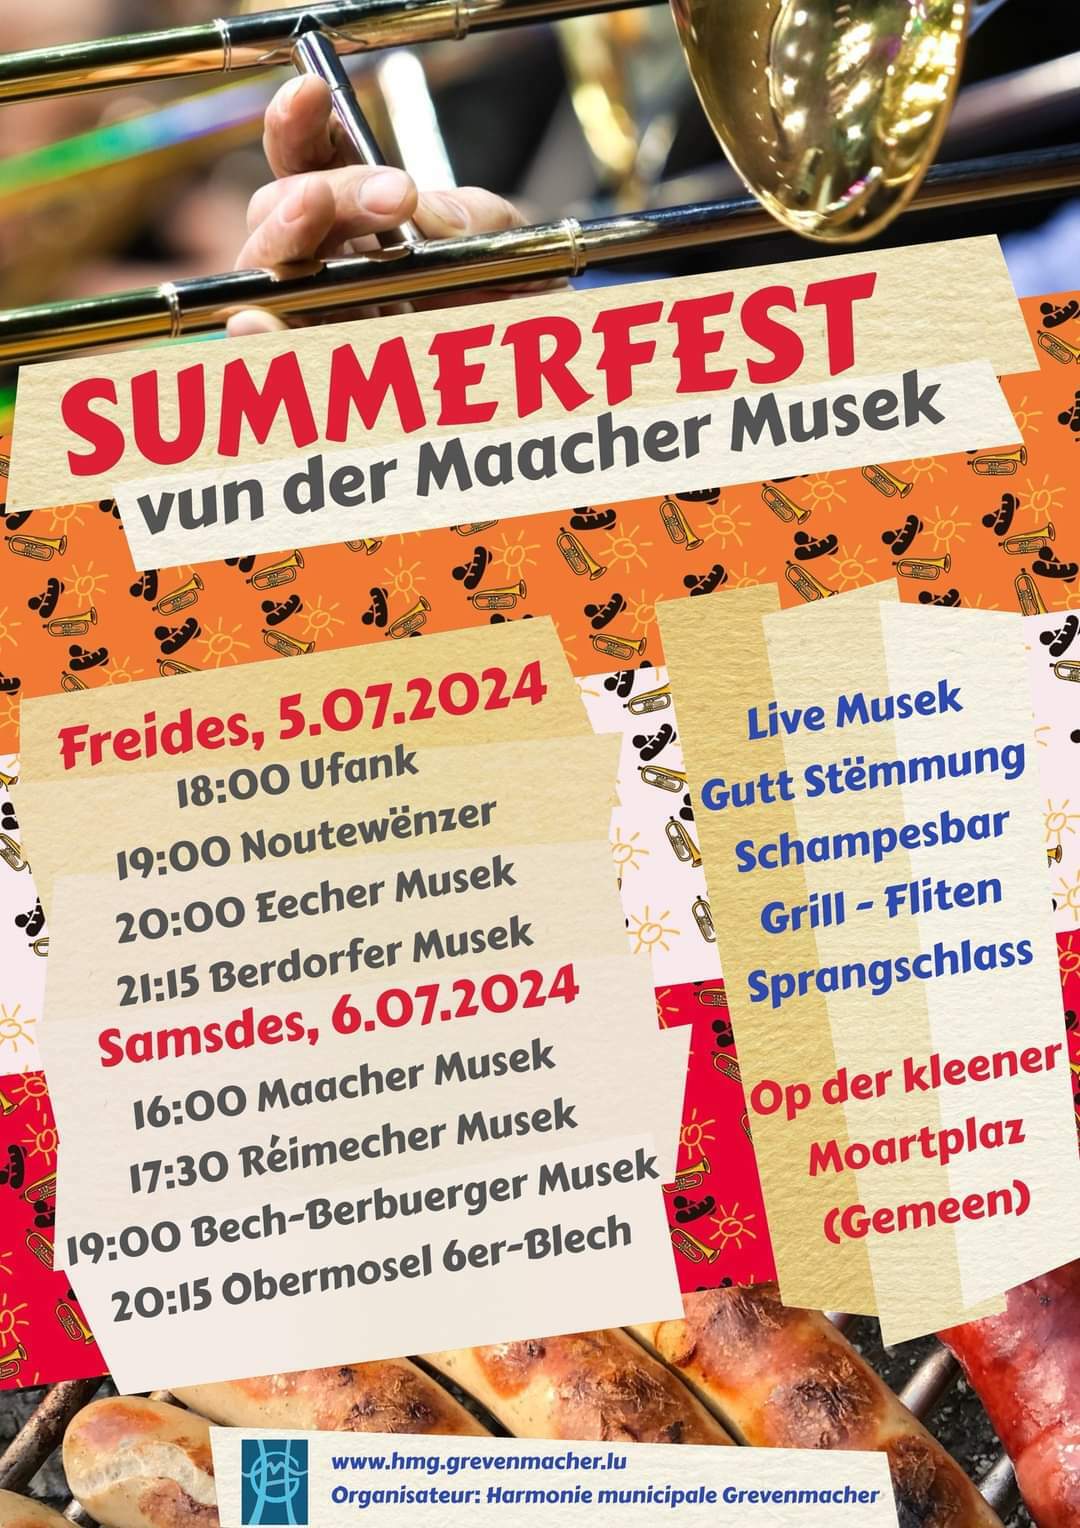 Summer festival of music makers